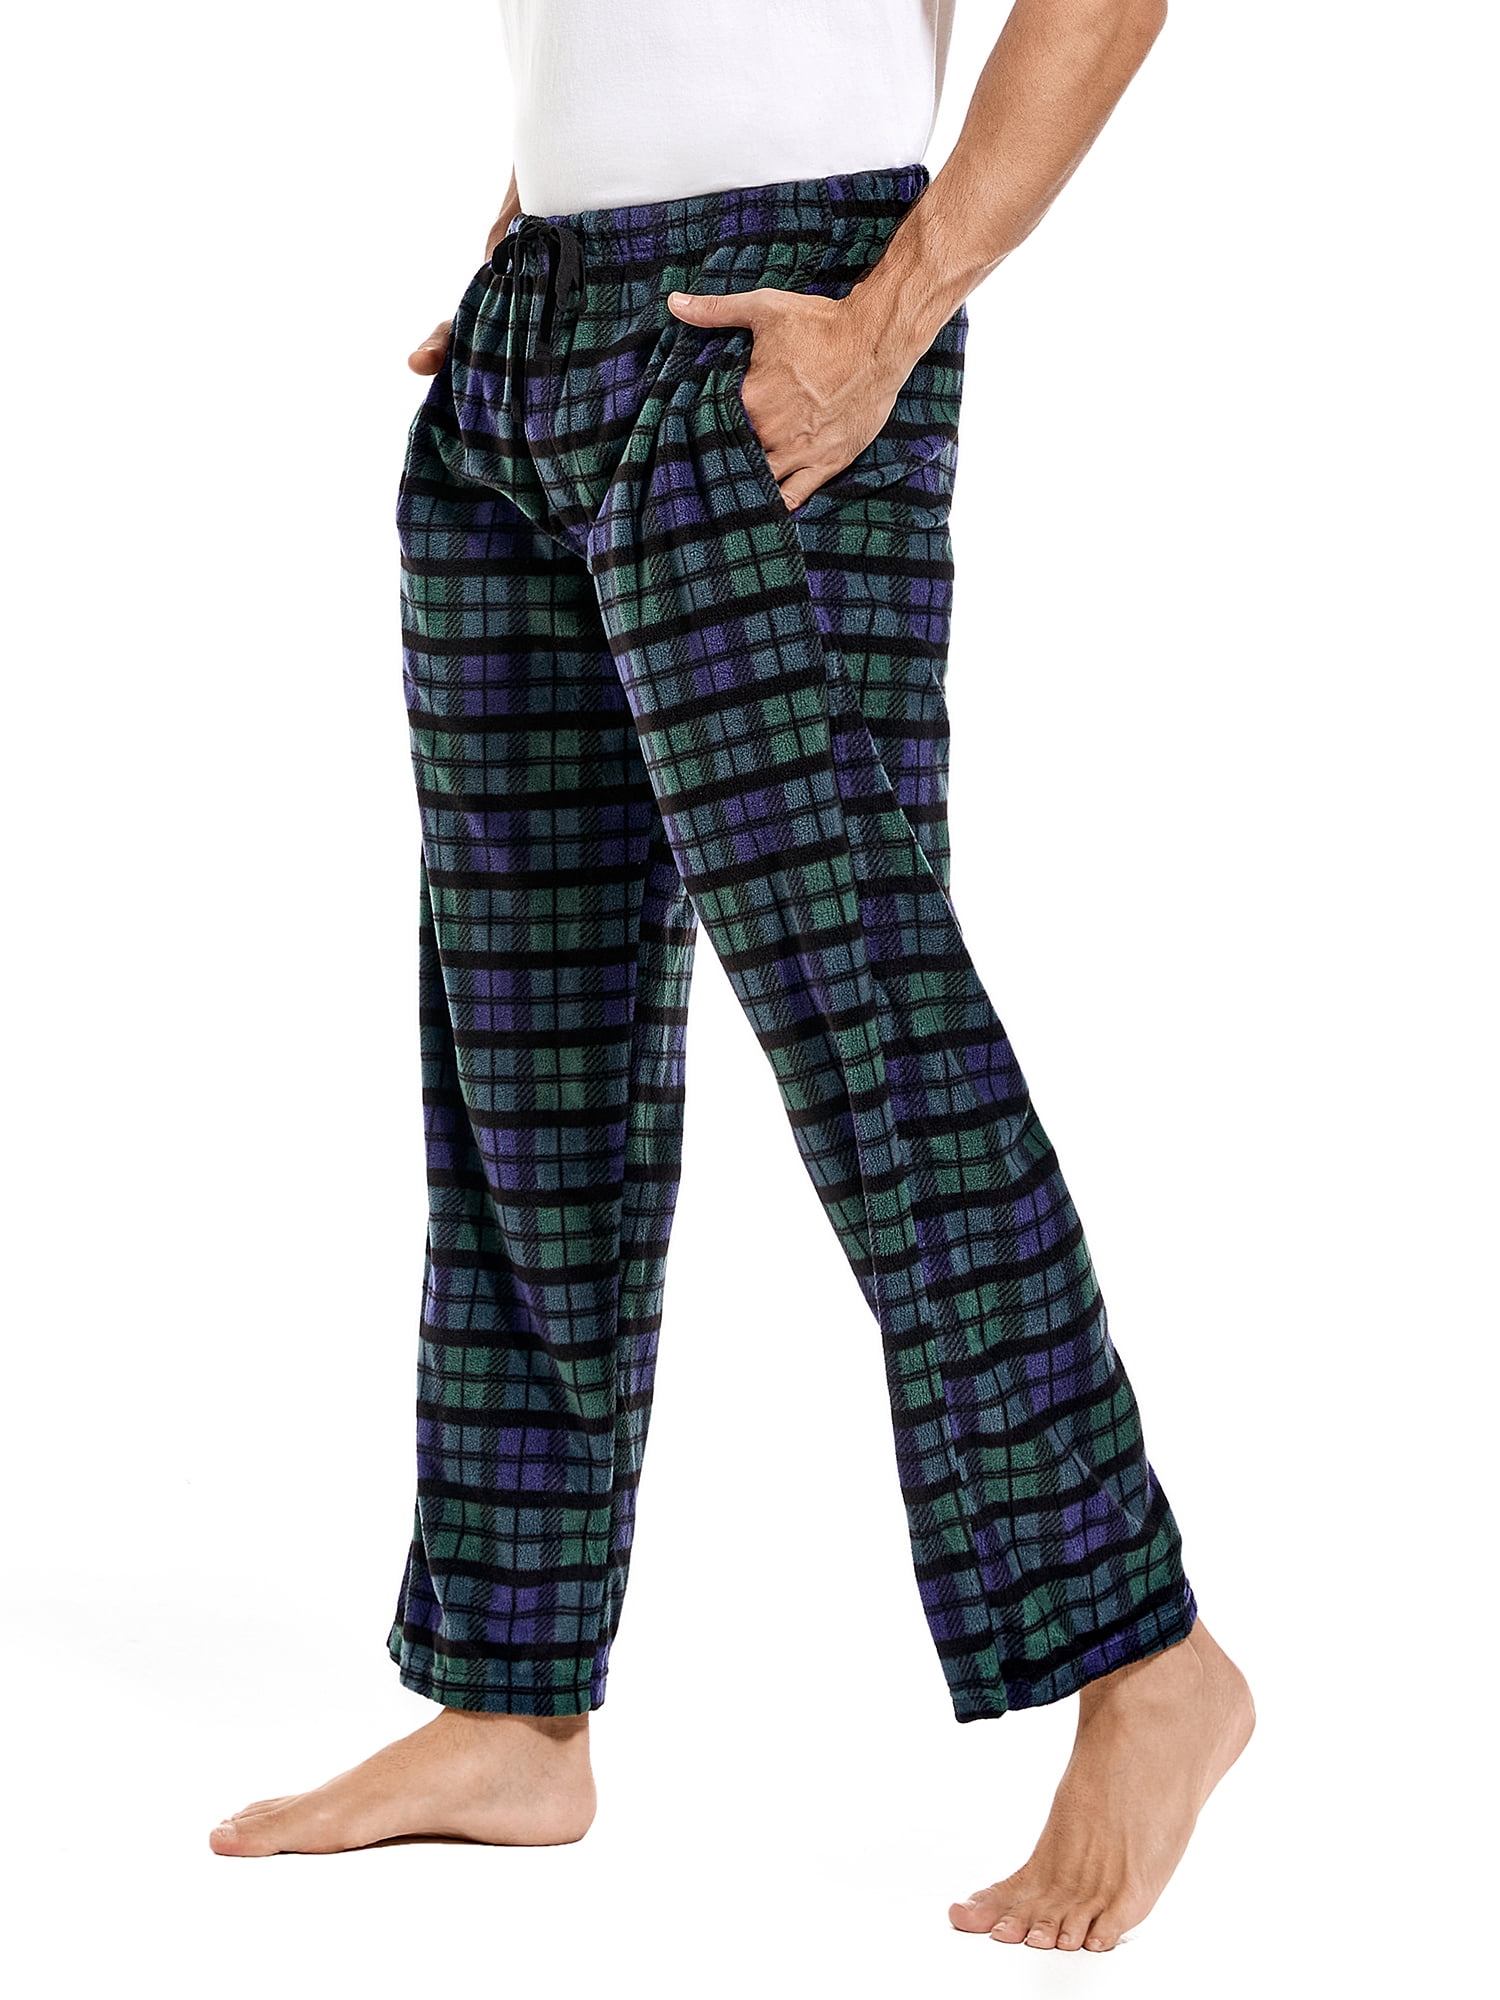 DG Hill Mens Sleep Pants, Fleece Pajama Bottoms with Pockets, 3